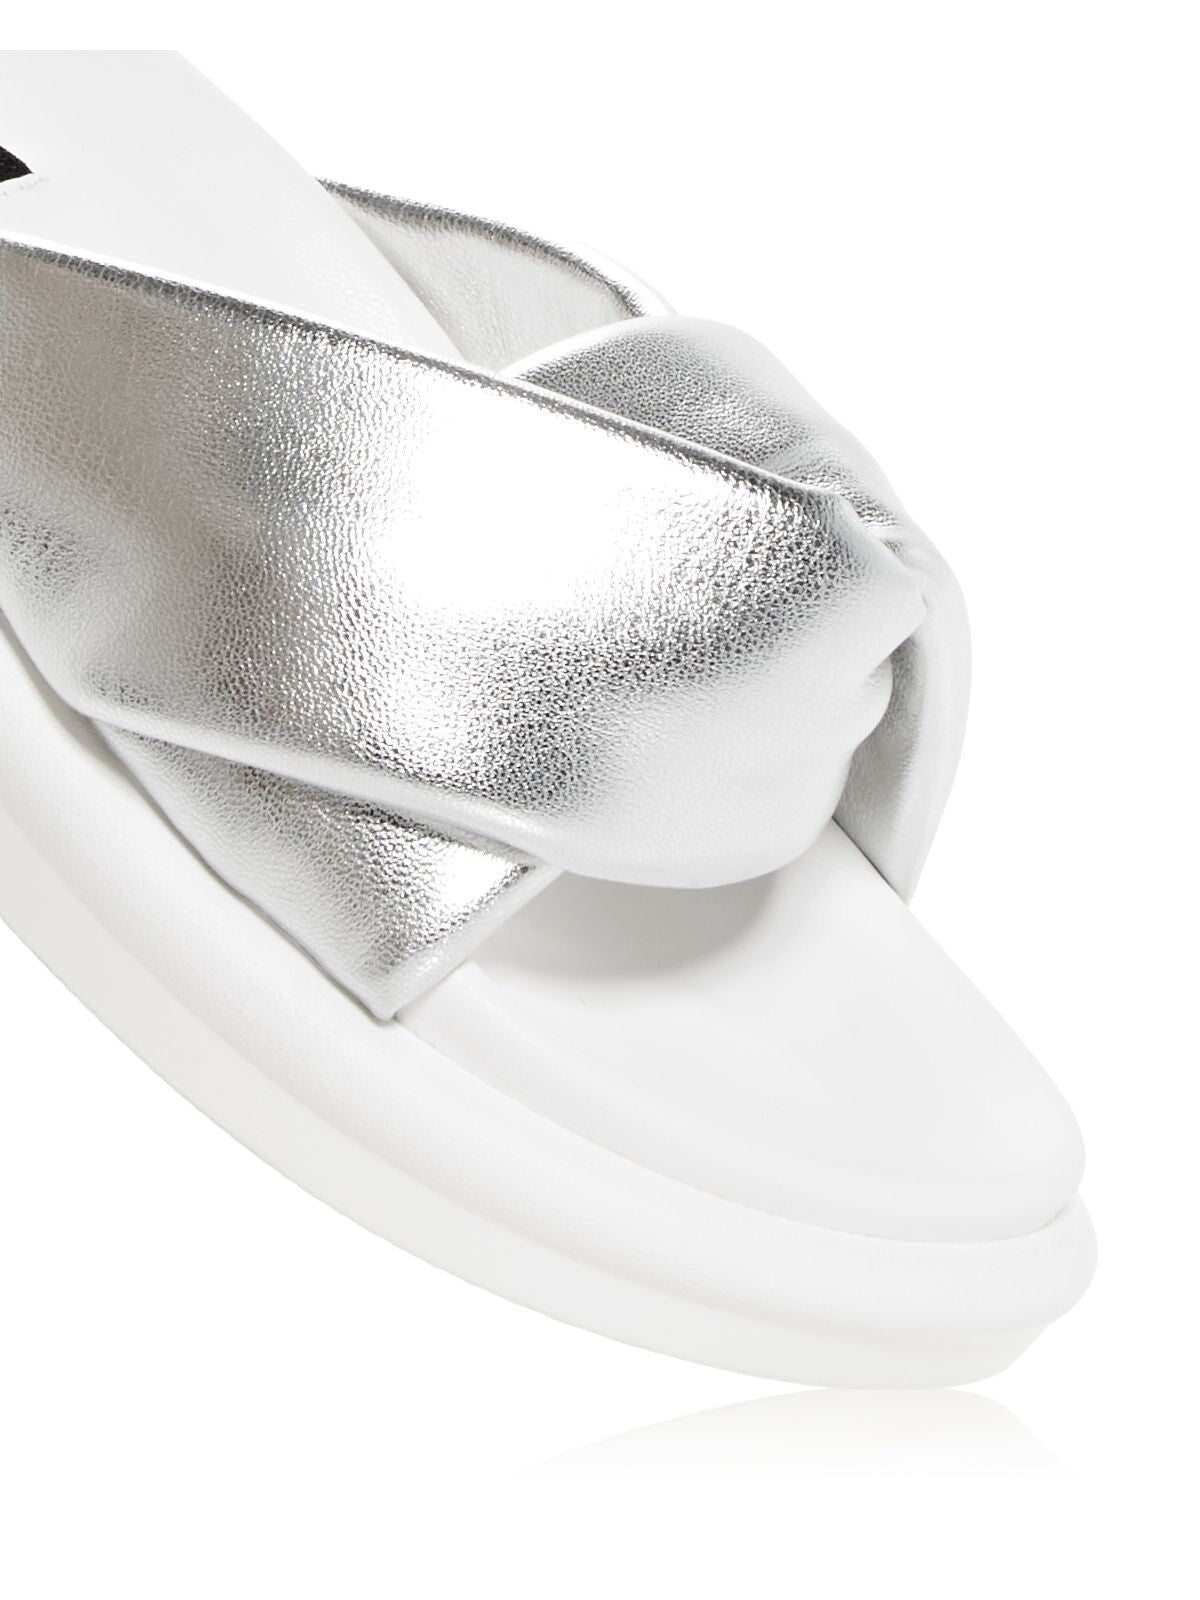 AQUA Womens Silver Comfort Ryle Round Toe Platform Slip On Slide Sandals Shoes M